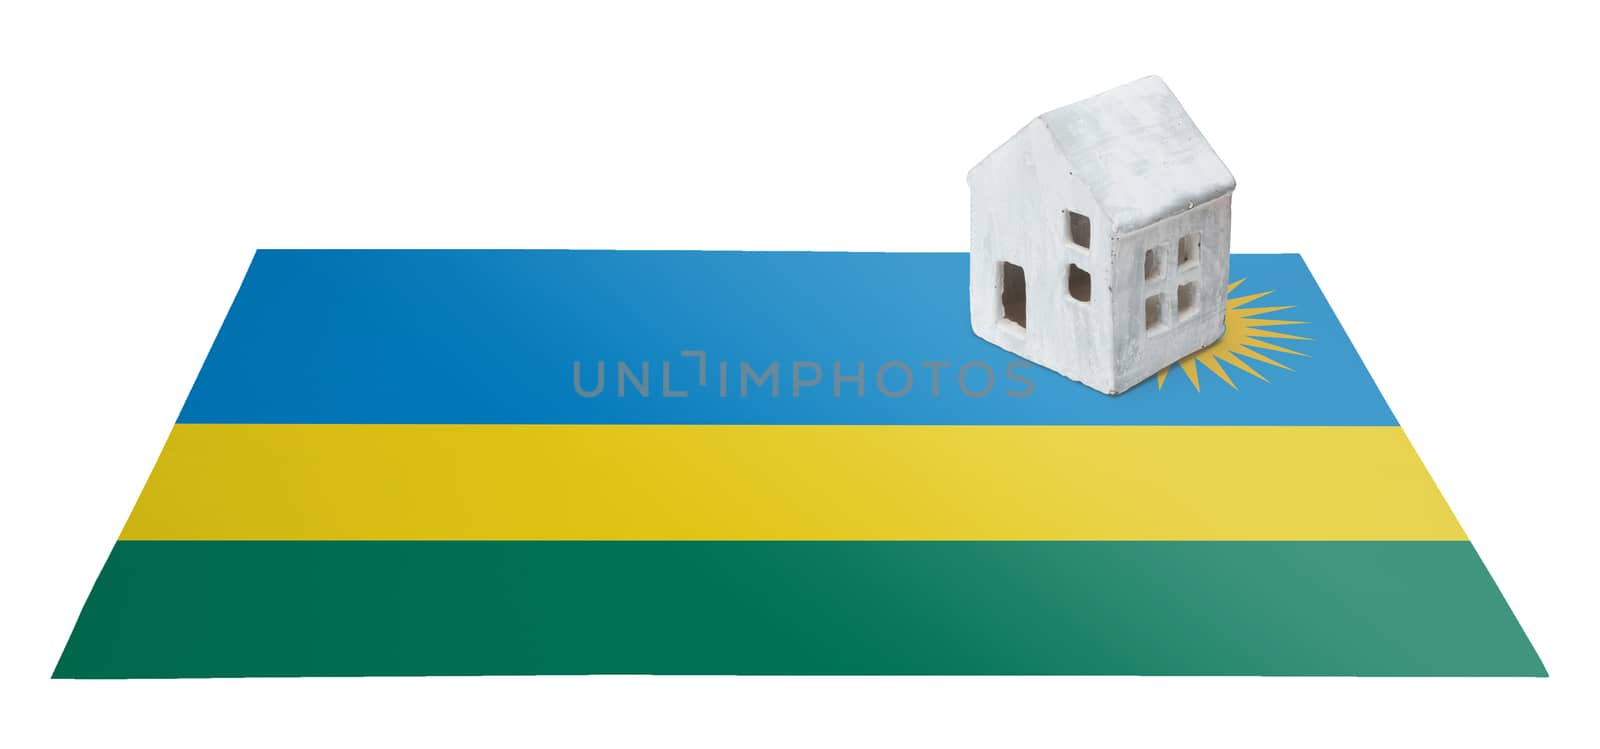 Small house on a flag - Rwanda by michaklootwijk